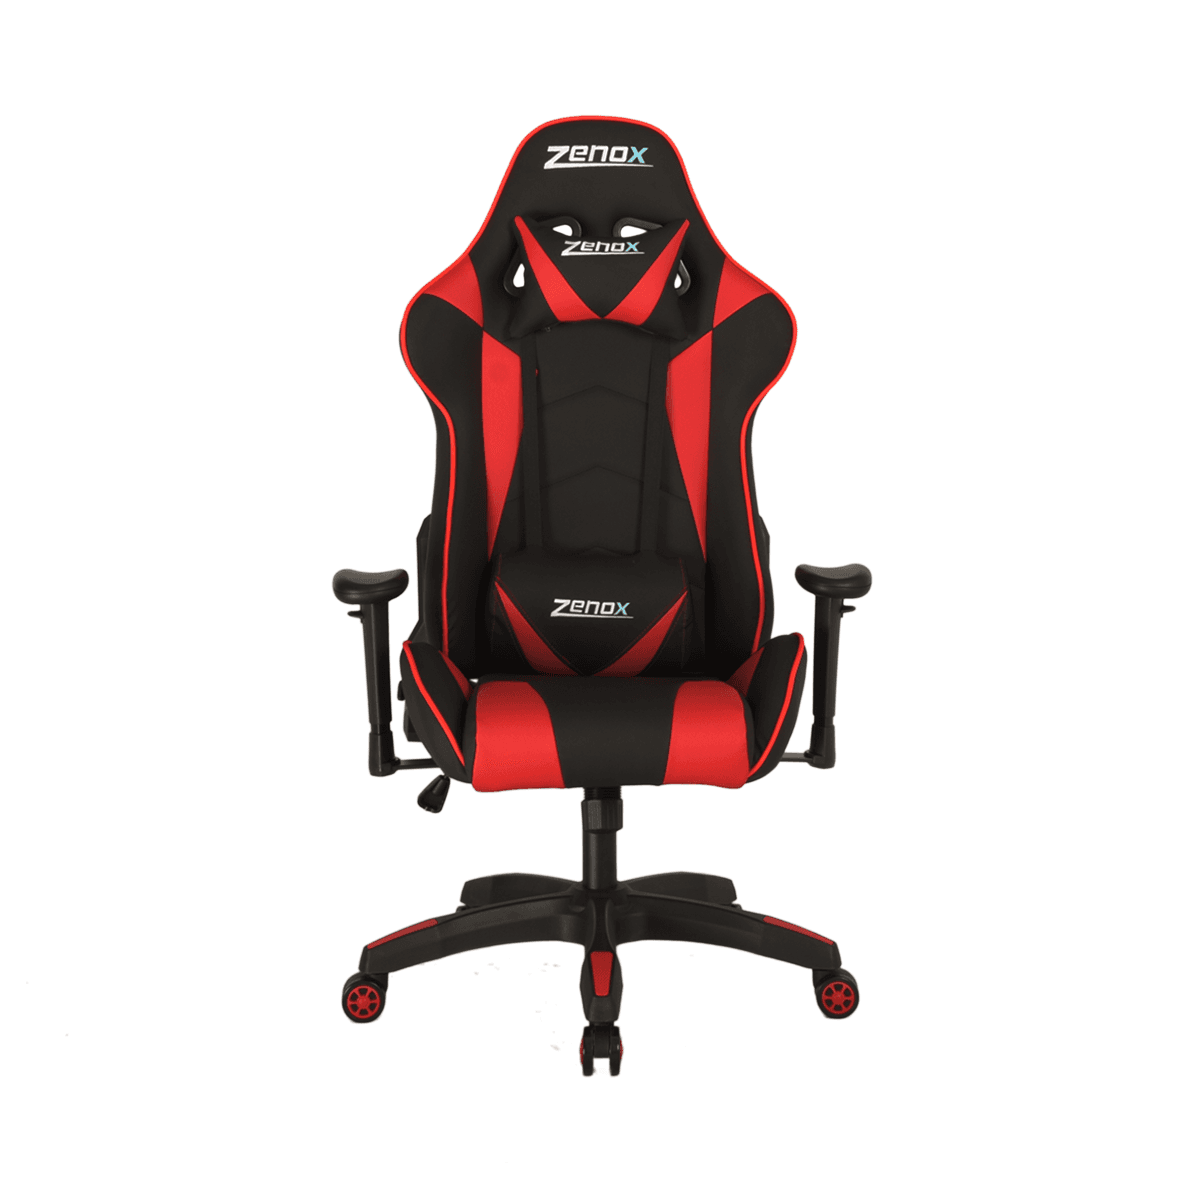 ZENOX Saturn Gaming Chair (Red)